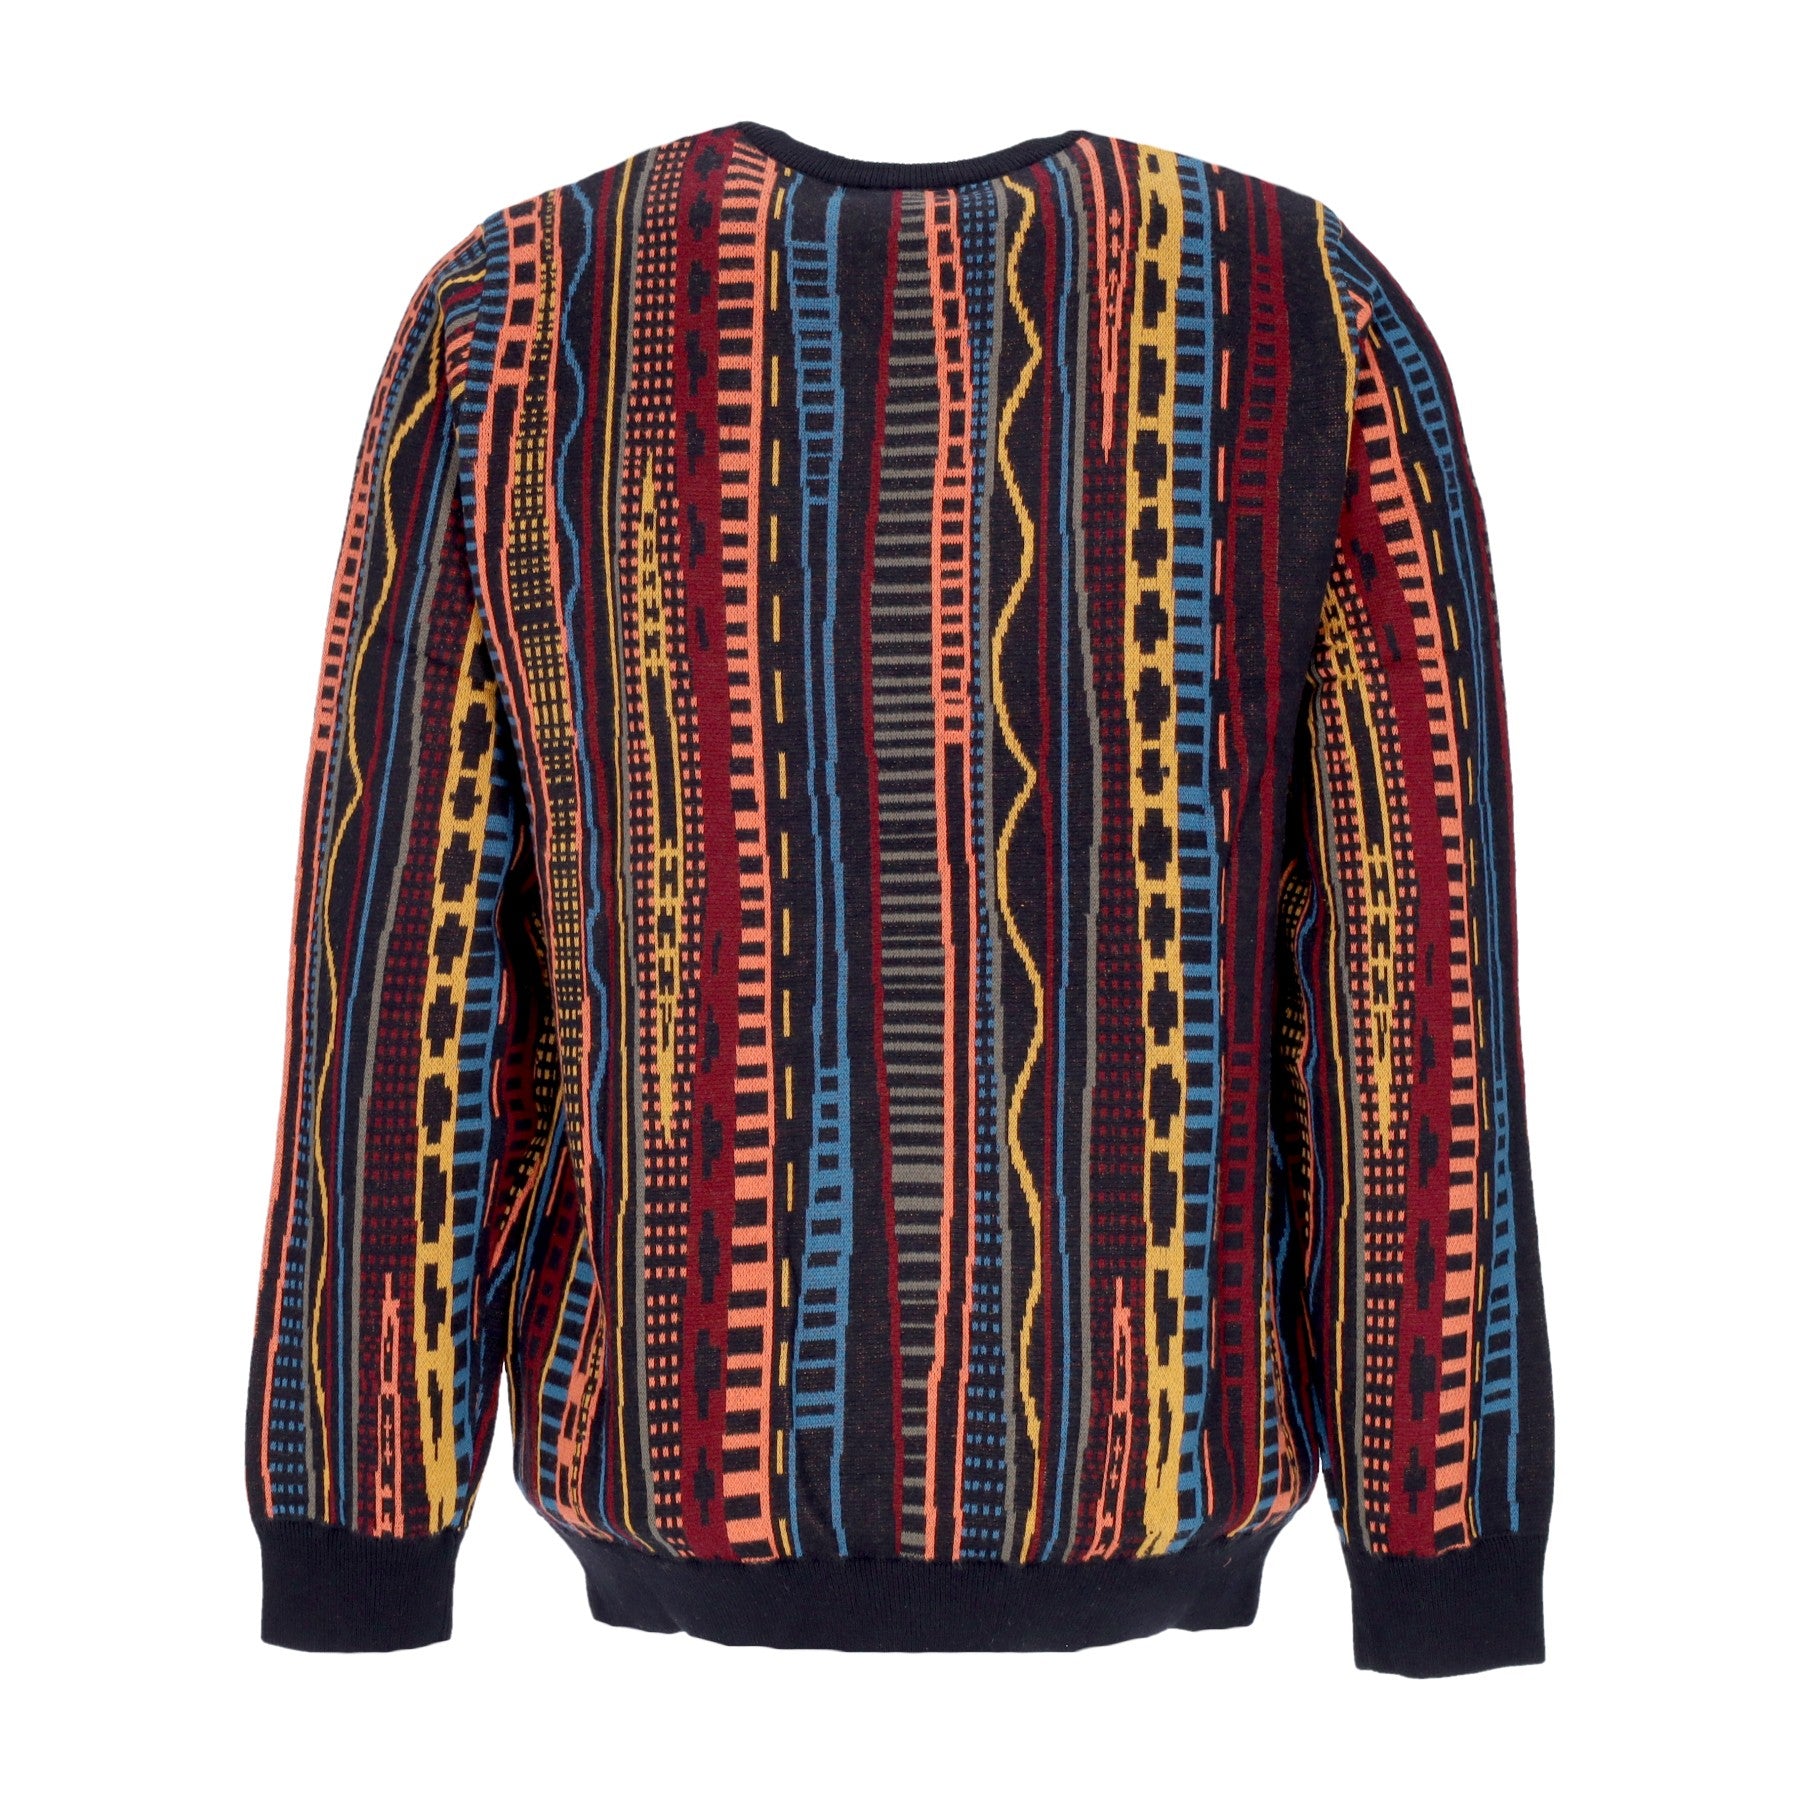 Theodore Knit Men's Sweater Black